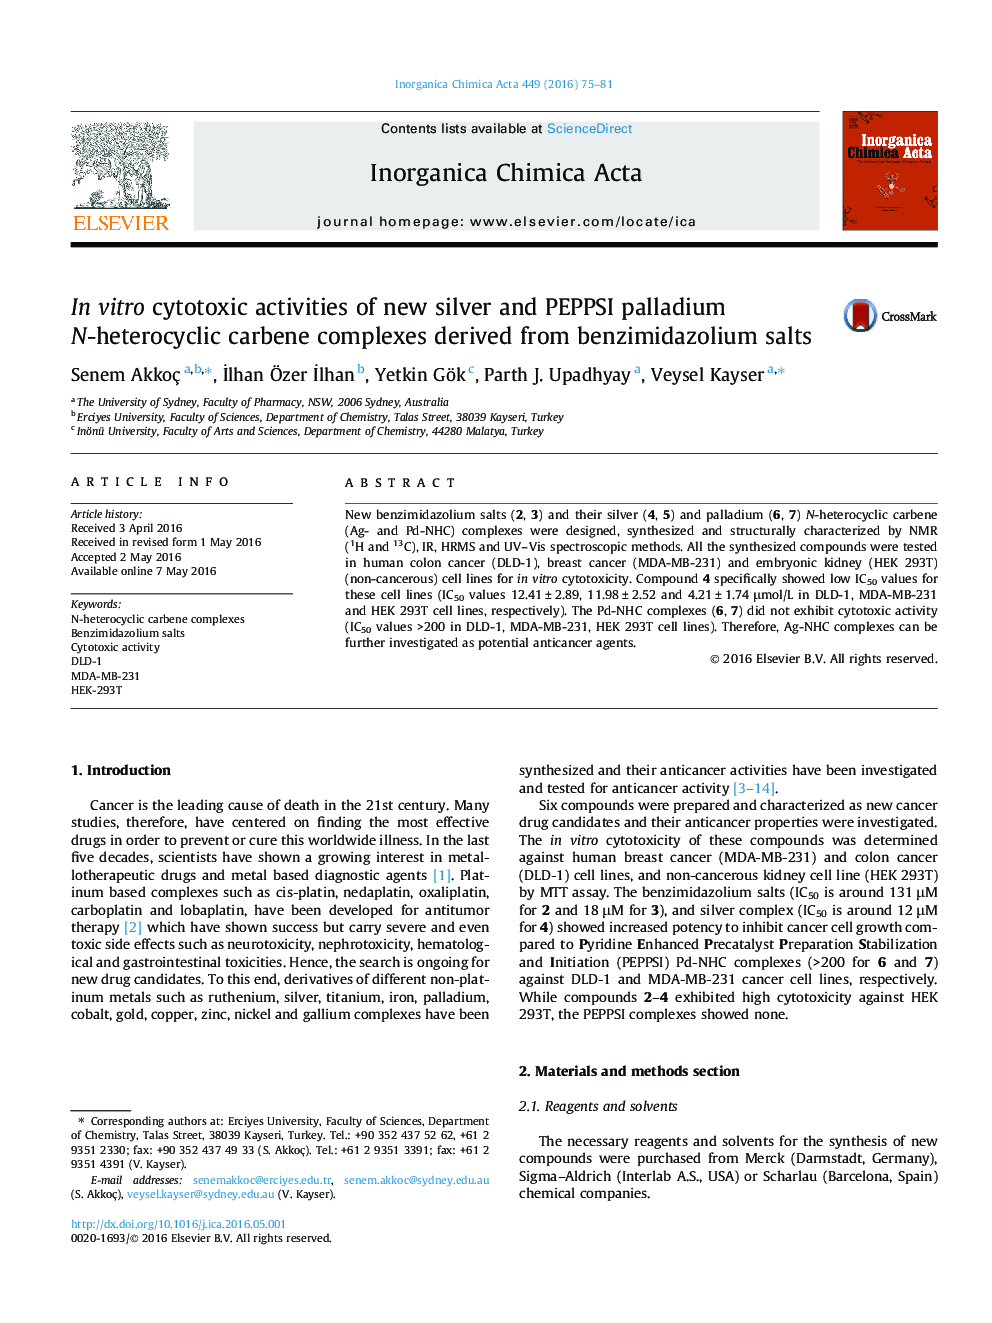 In vitro cytotoxic activities of new silver and PEPPSI palladium N-heterocyclic carbene complexes derived from benzimidazolium salts